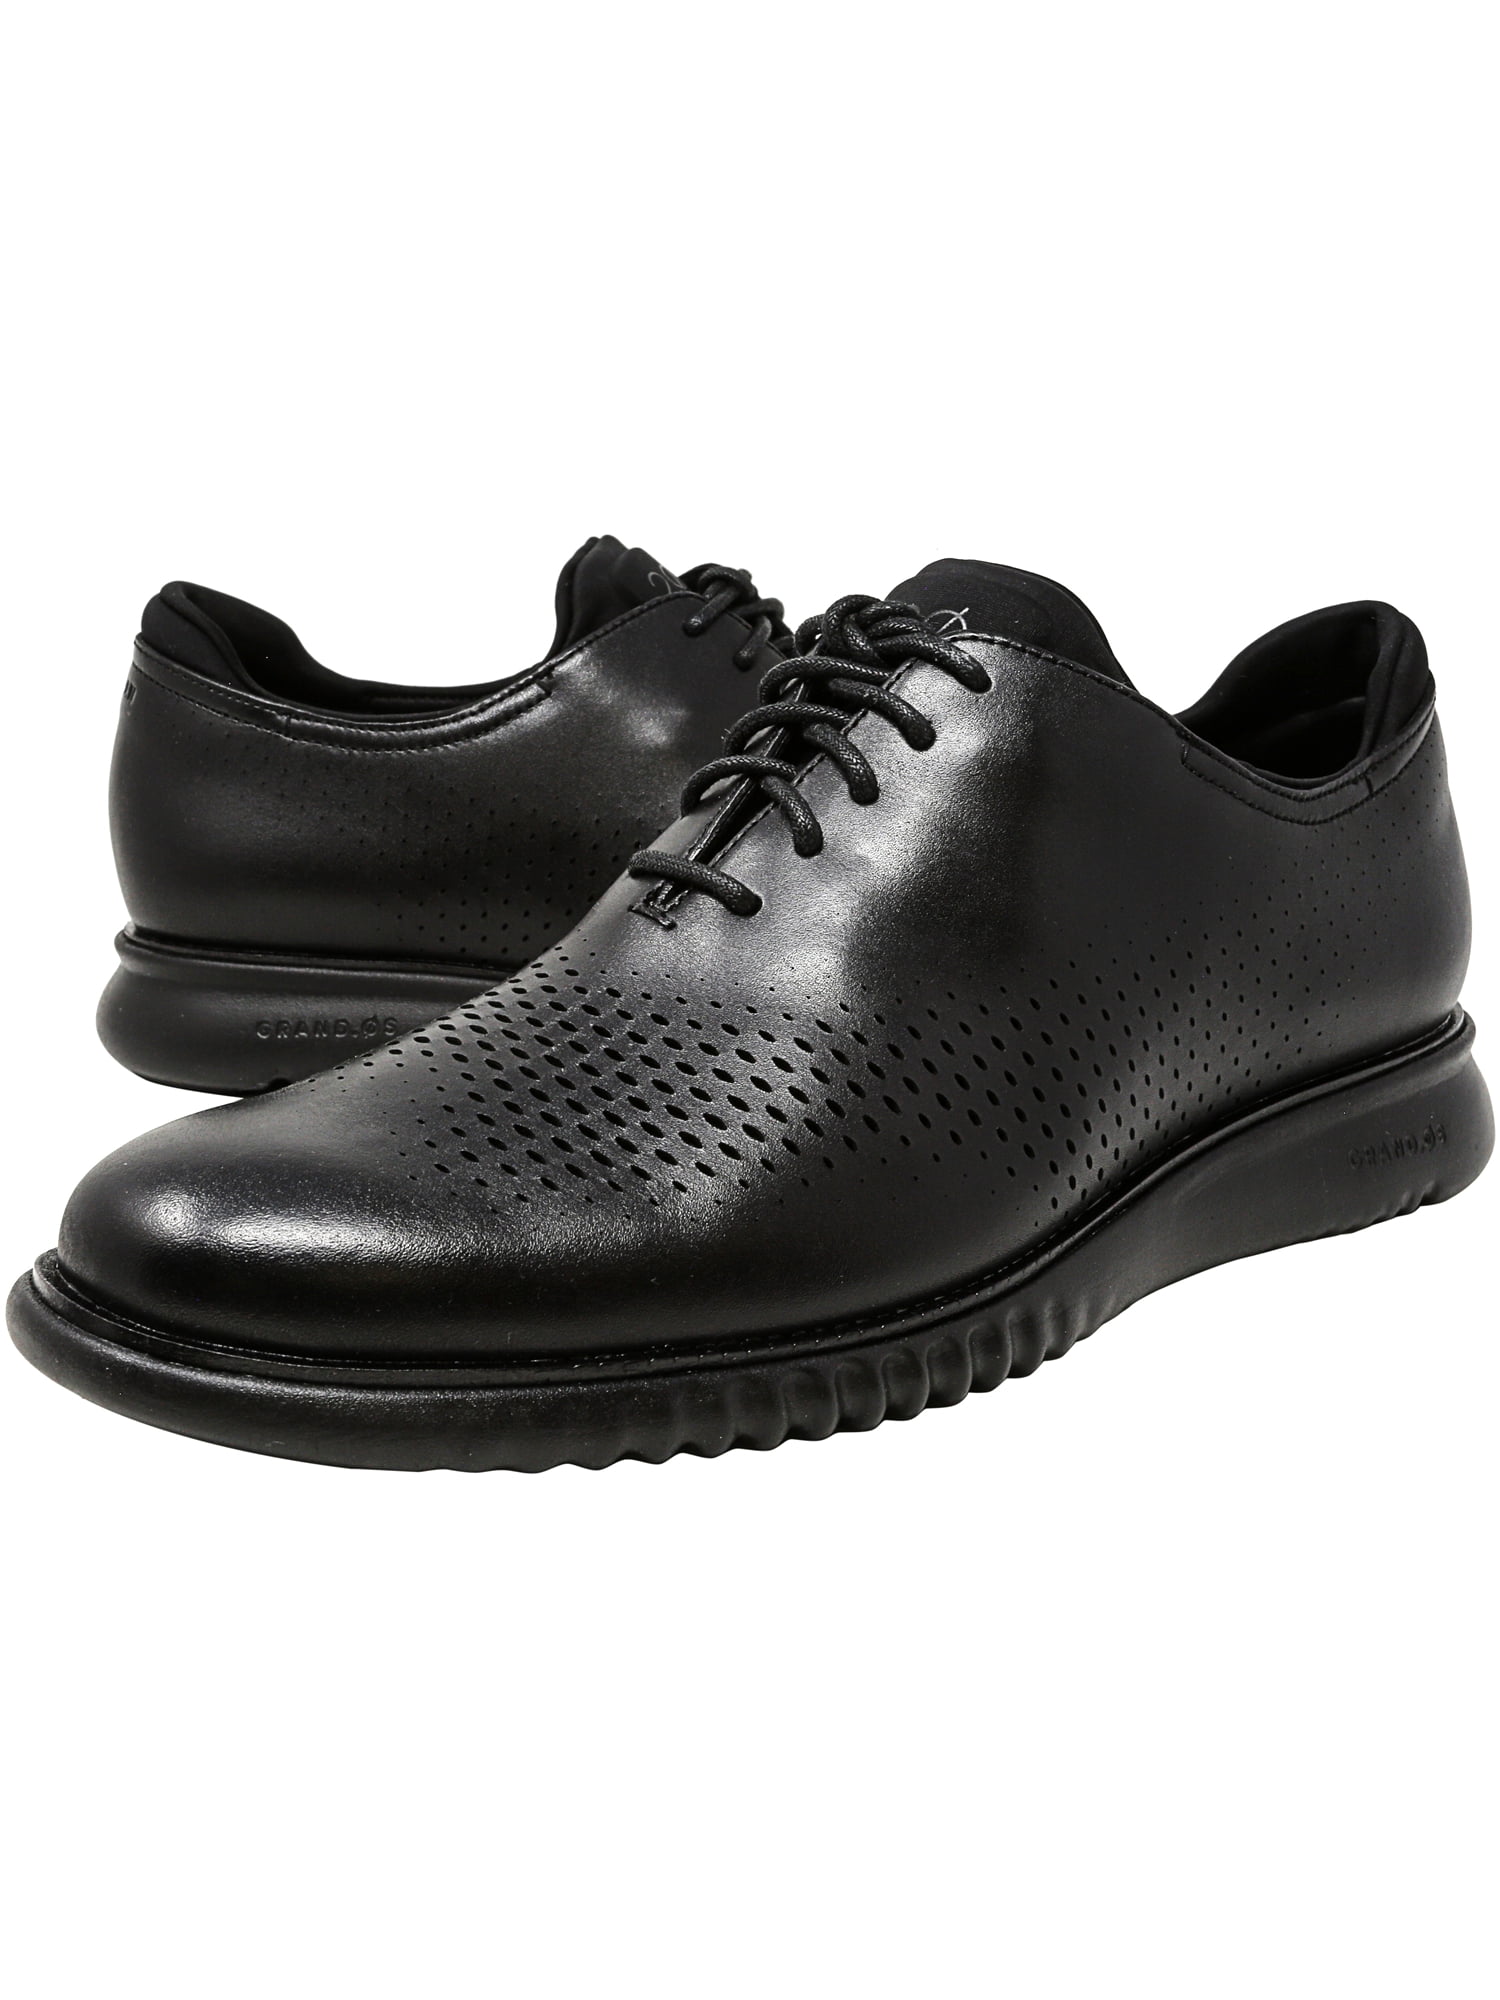 Cole Haan Mens 2.0 Zerogrand Laser Wingtip Oxford Shoe - Black